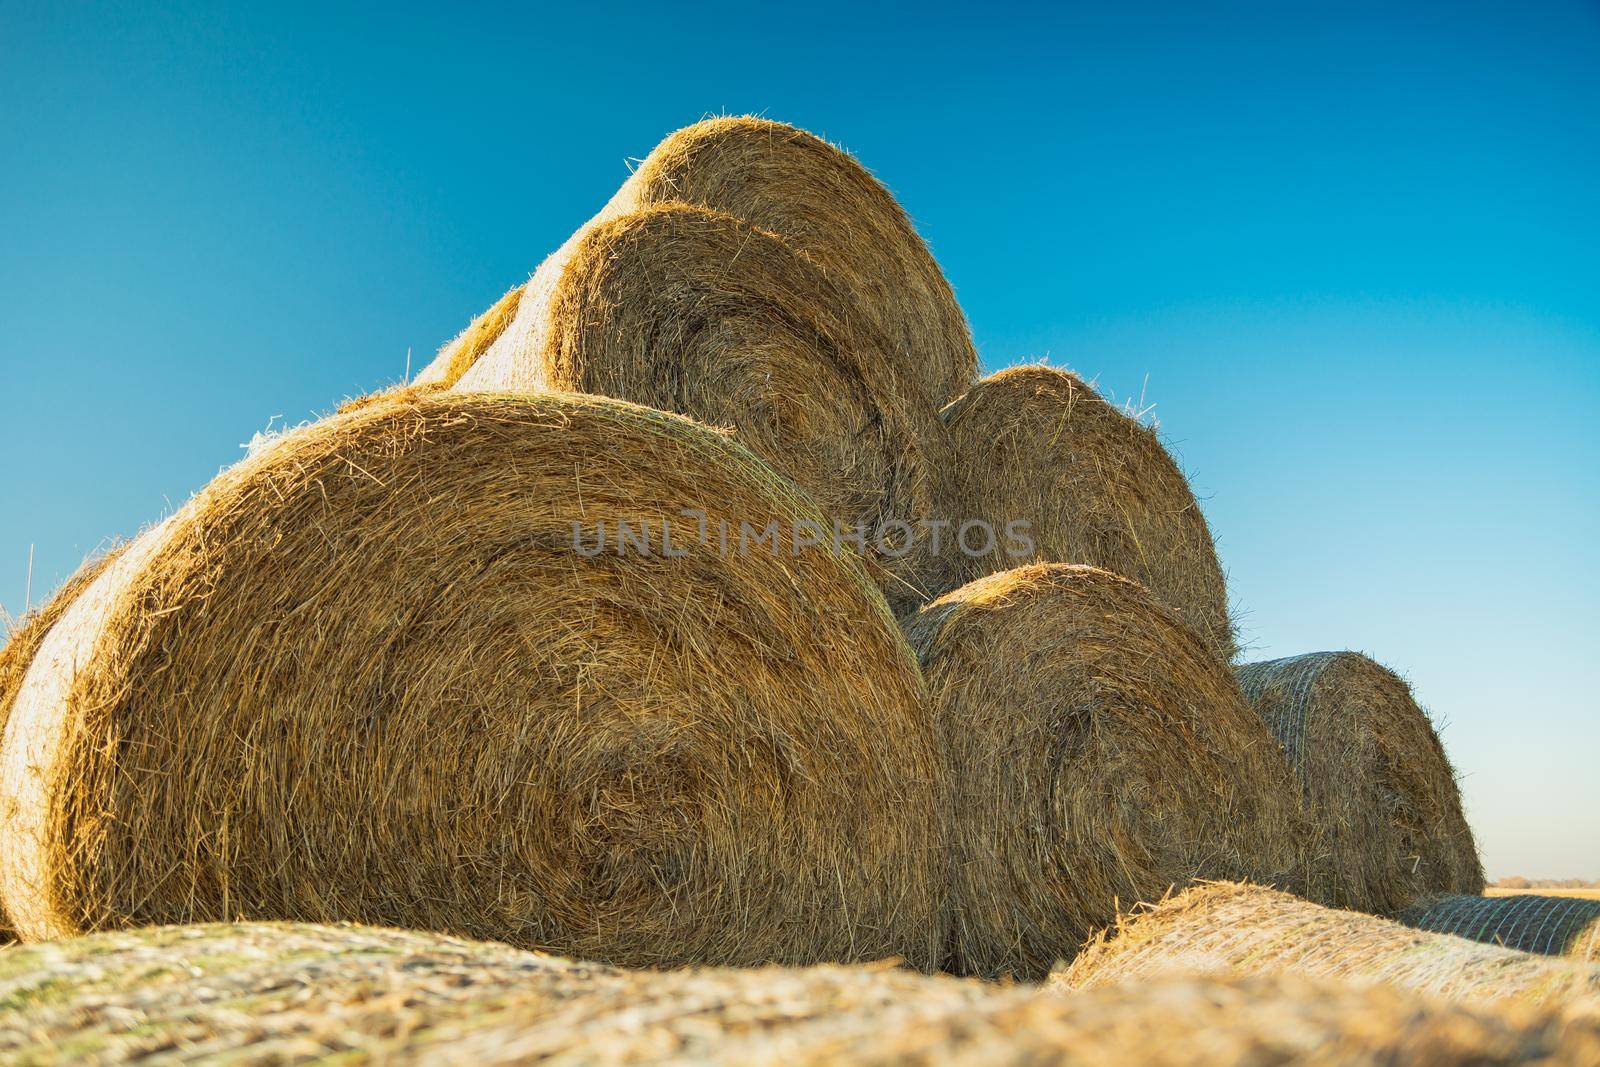 Pyramid of hay bales against the sky by darekb22